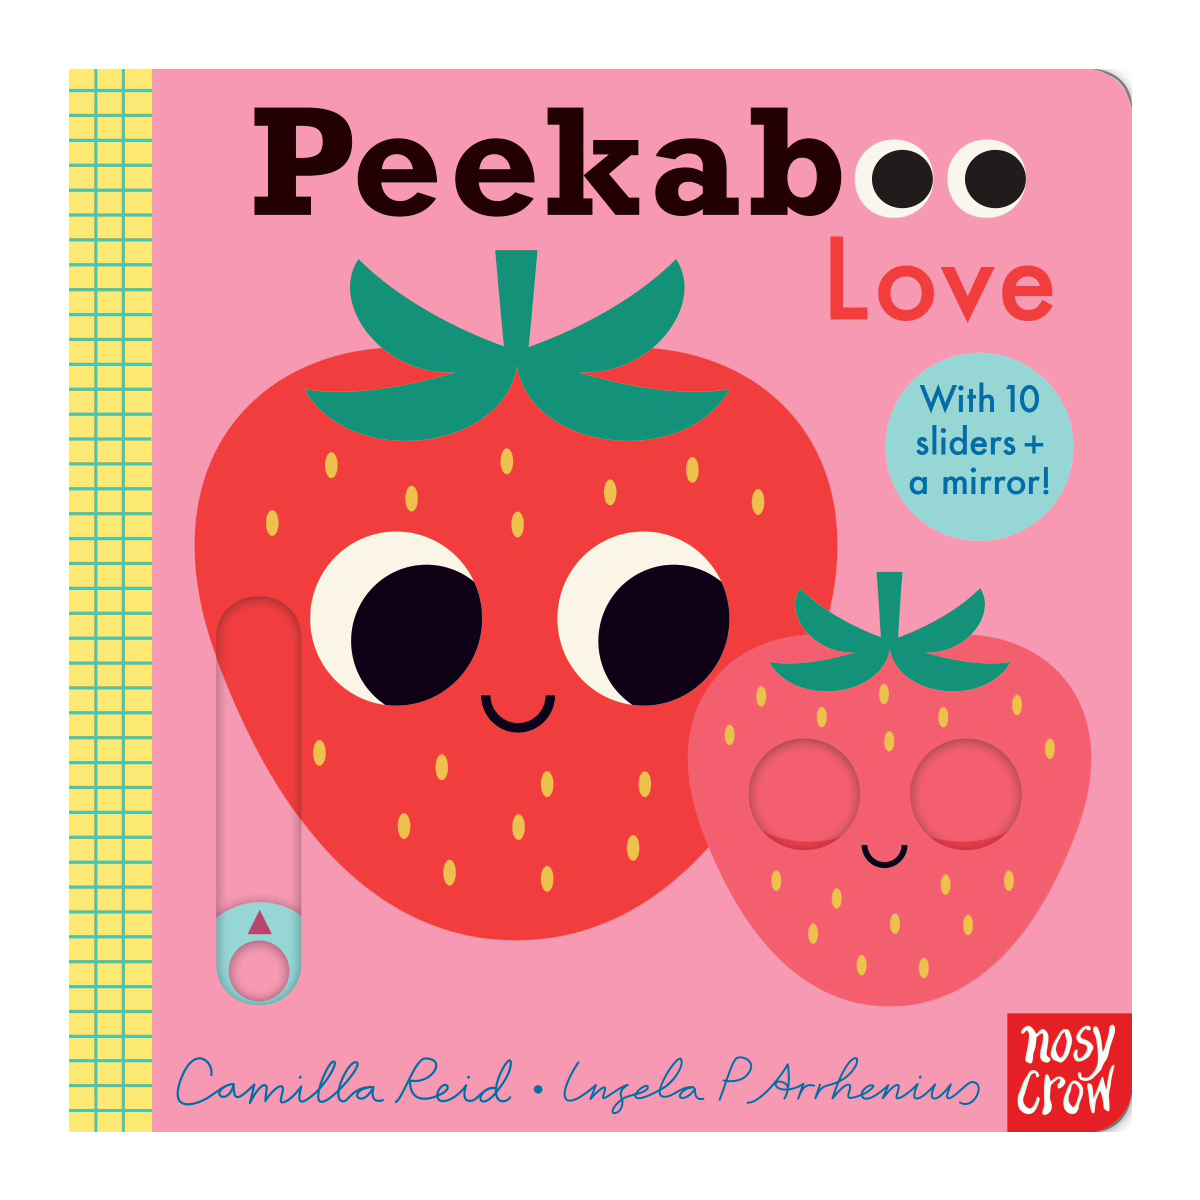 Peekaboo Love